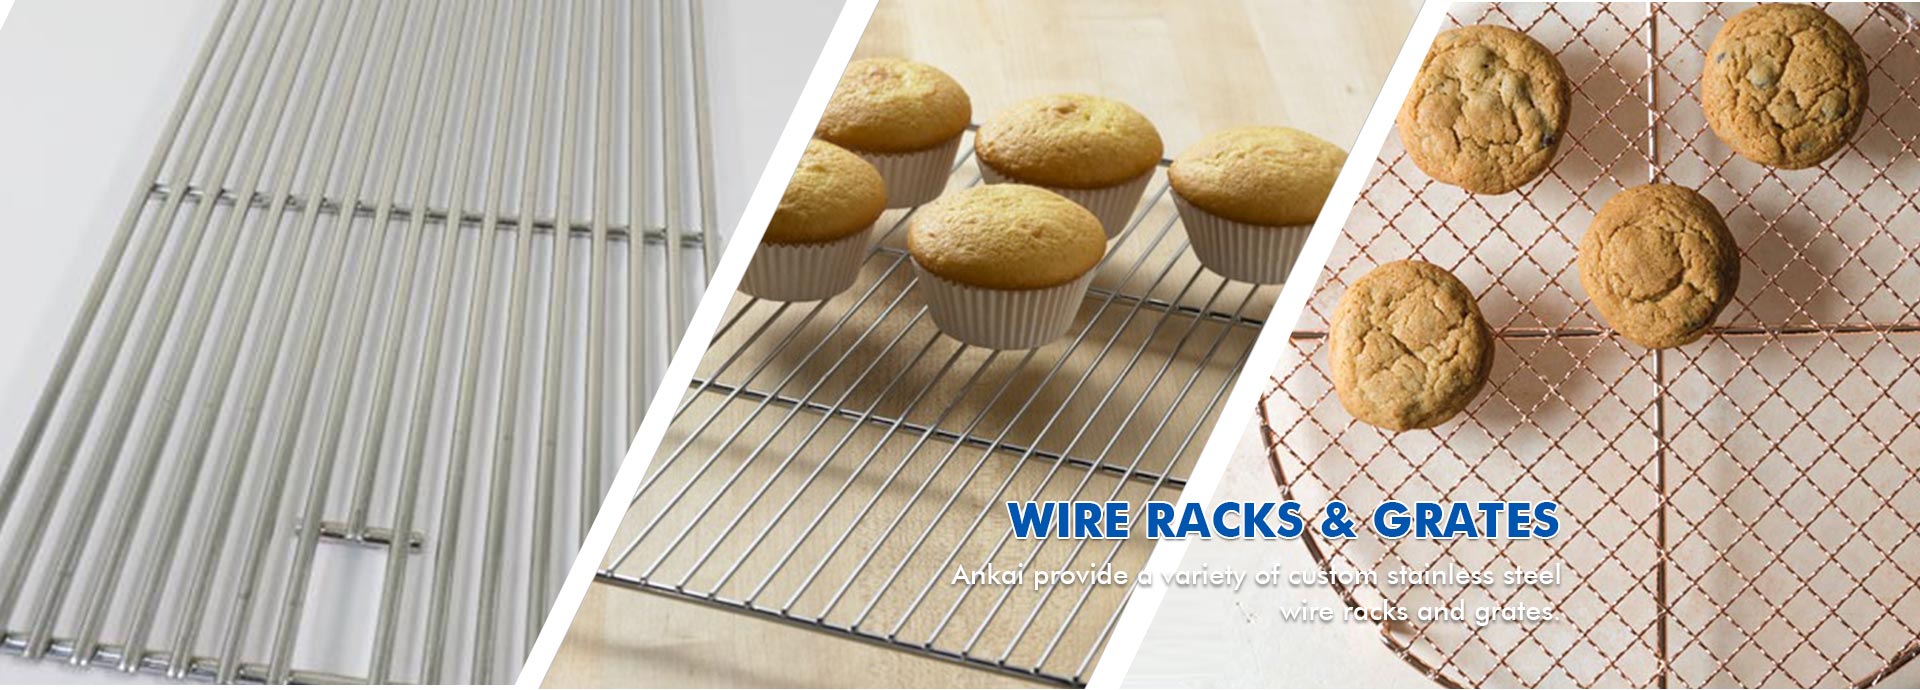 Wire Racks & Grates